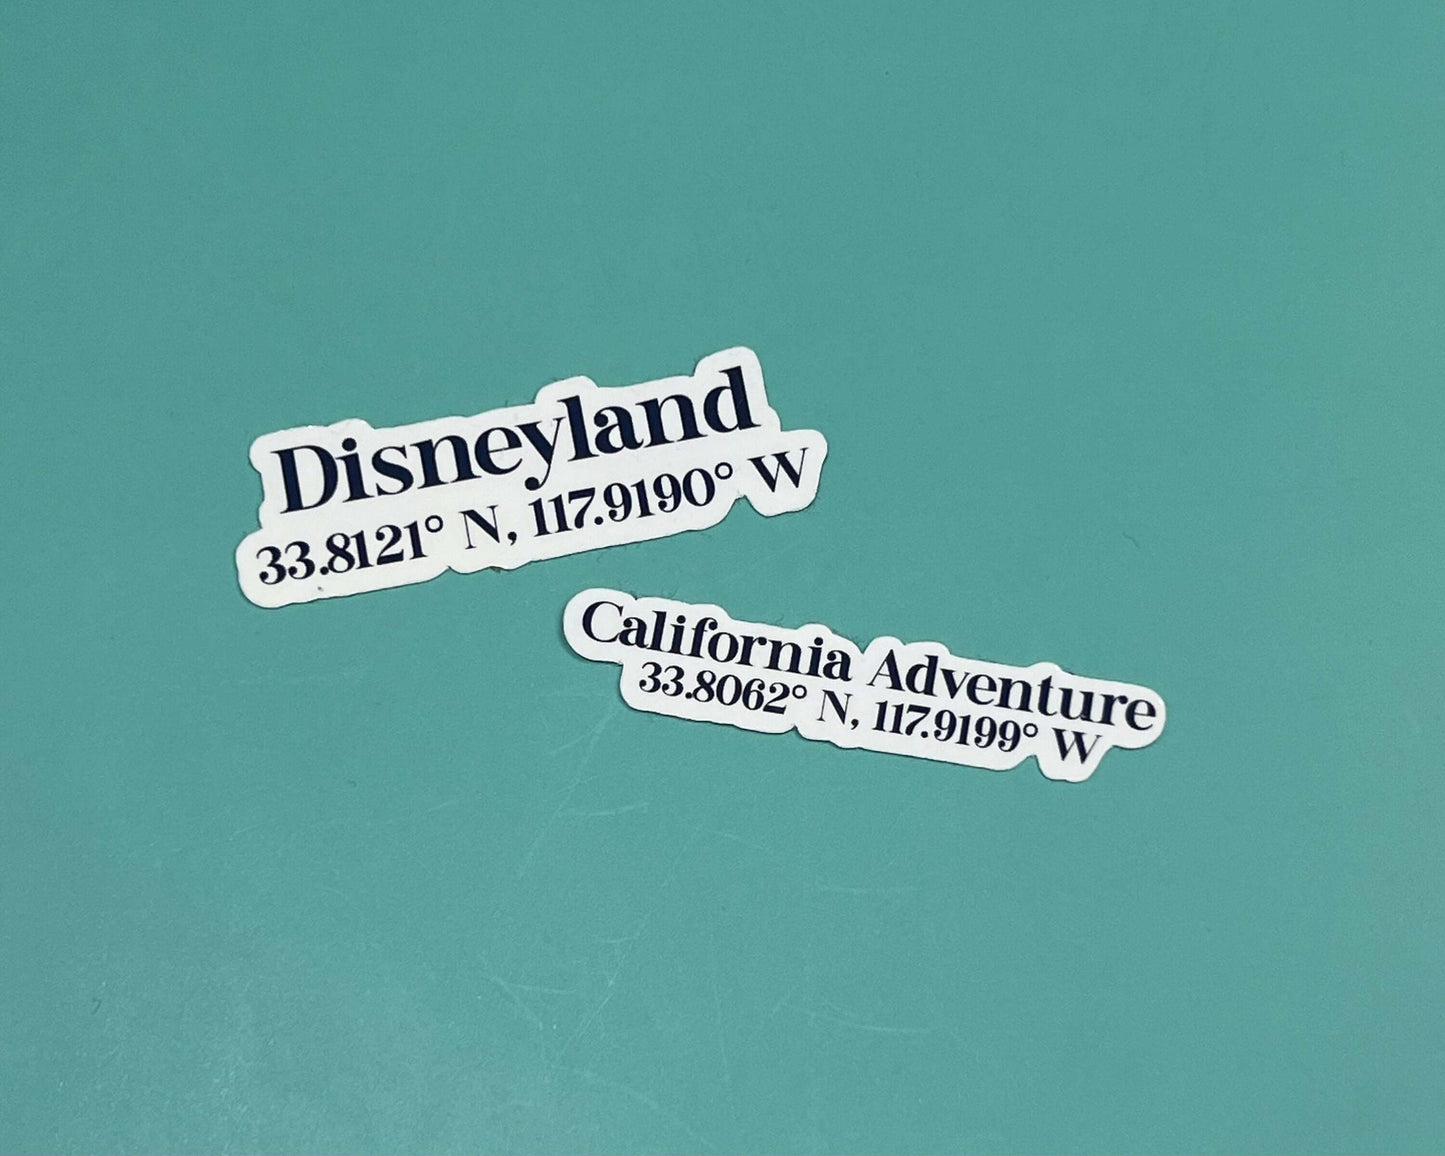 Disneyland and California Adventure Coordinate  Bundle - Waterproof Stickers